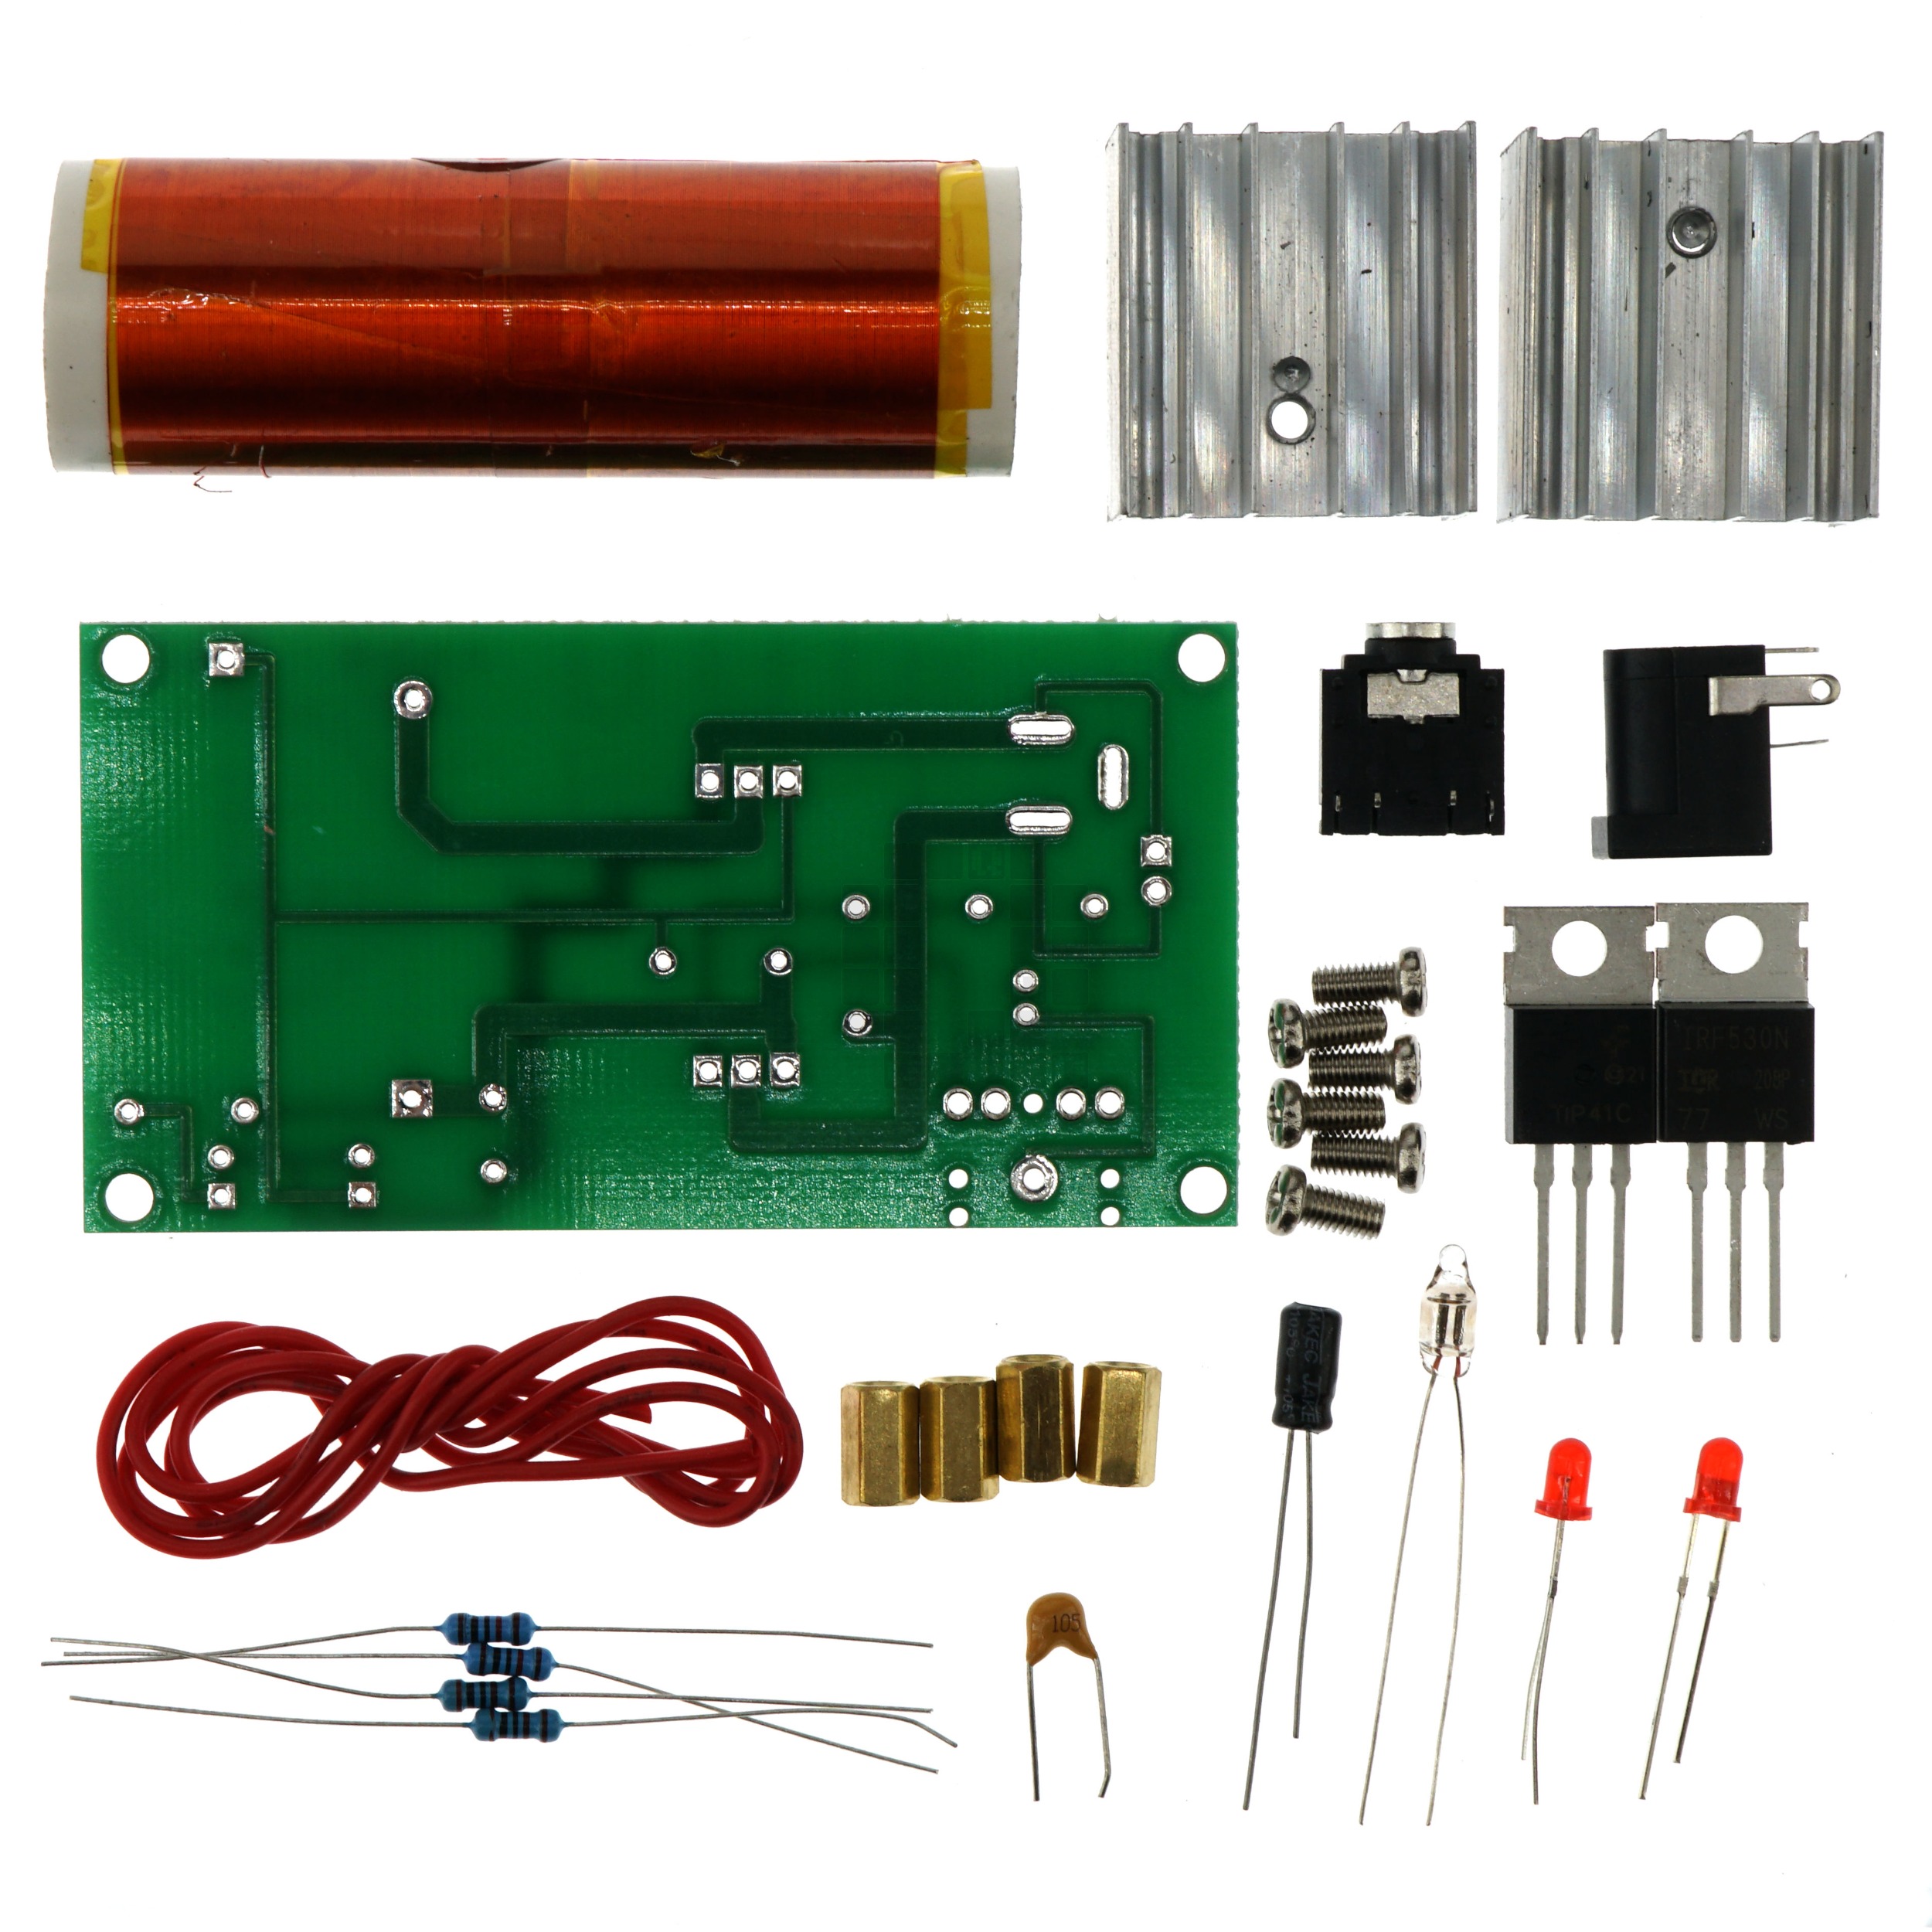 Geekcreit DIY Mini Electronic Tesla Coil Kit, 15-24VDC 2 Amps